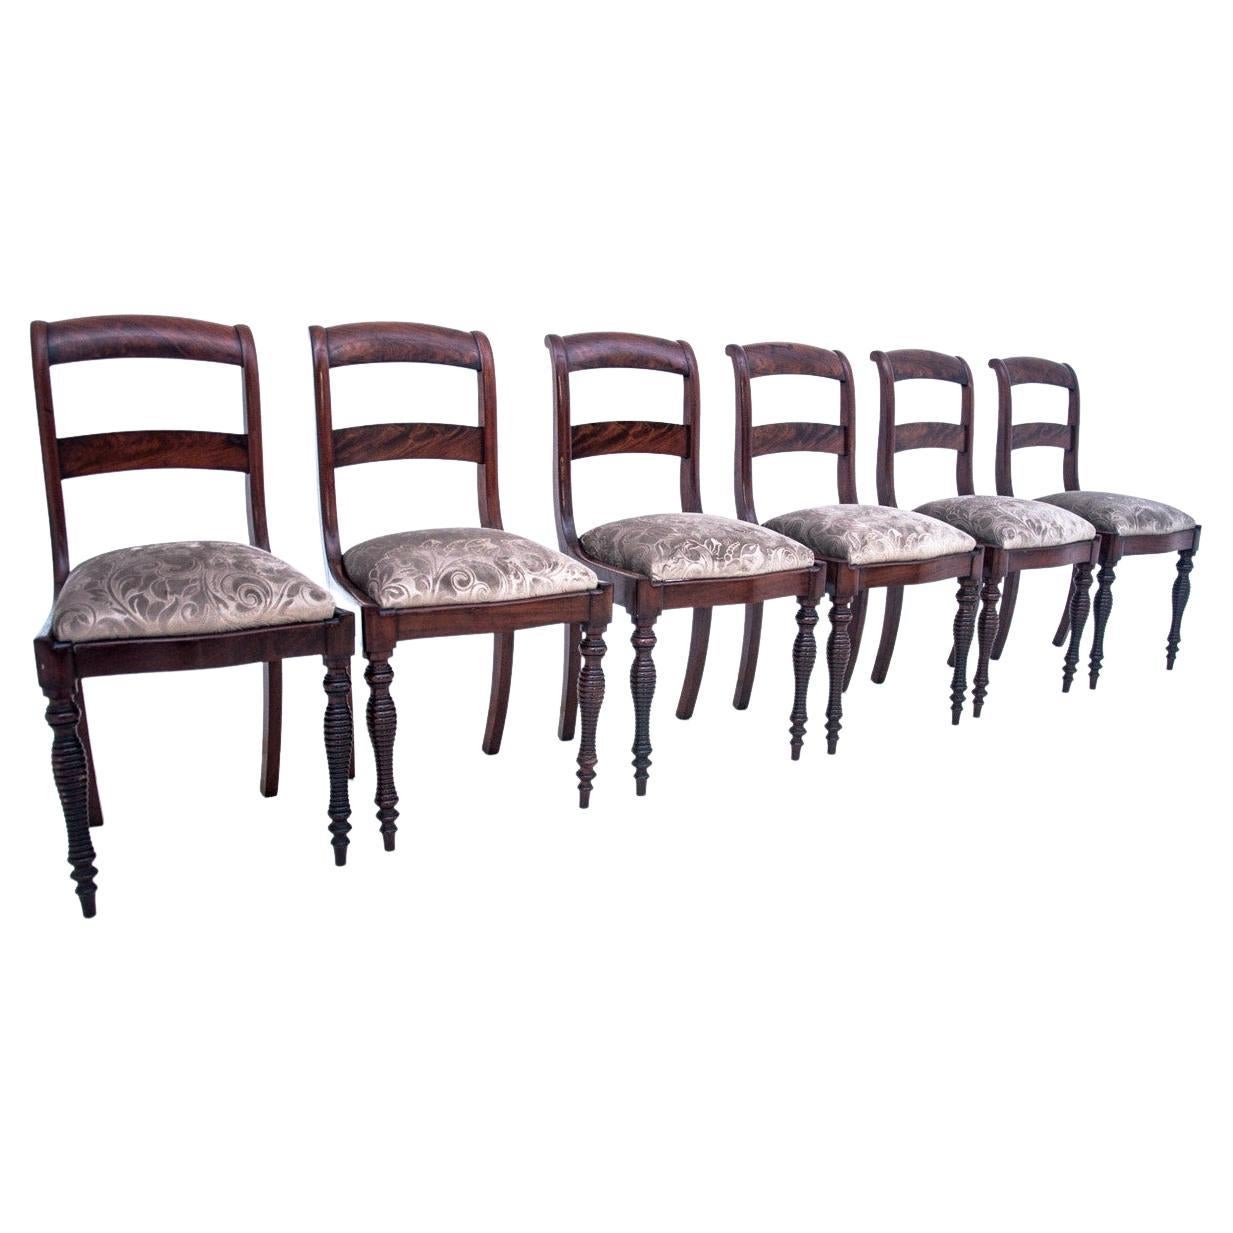 Set of Six Mahogany Dining Chairs, France, circa 1880